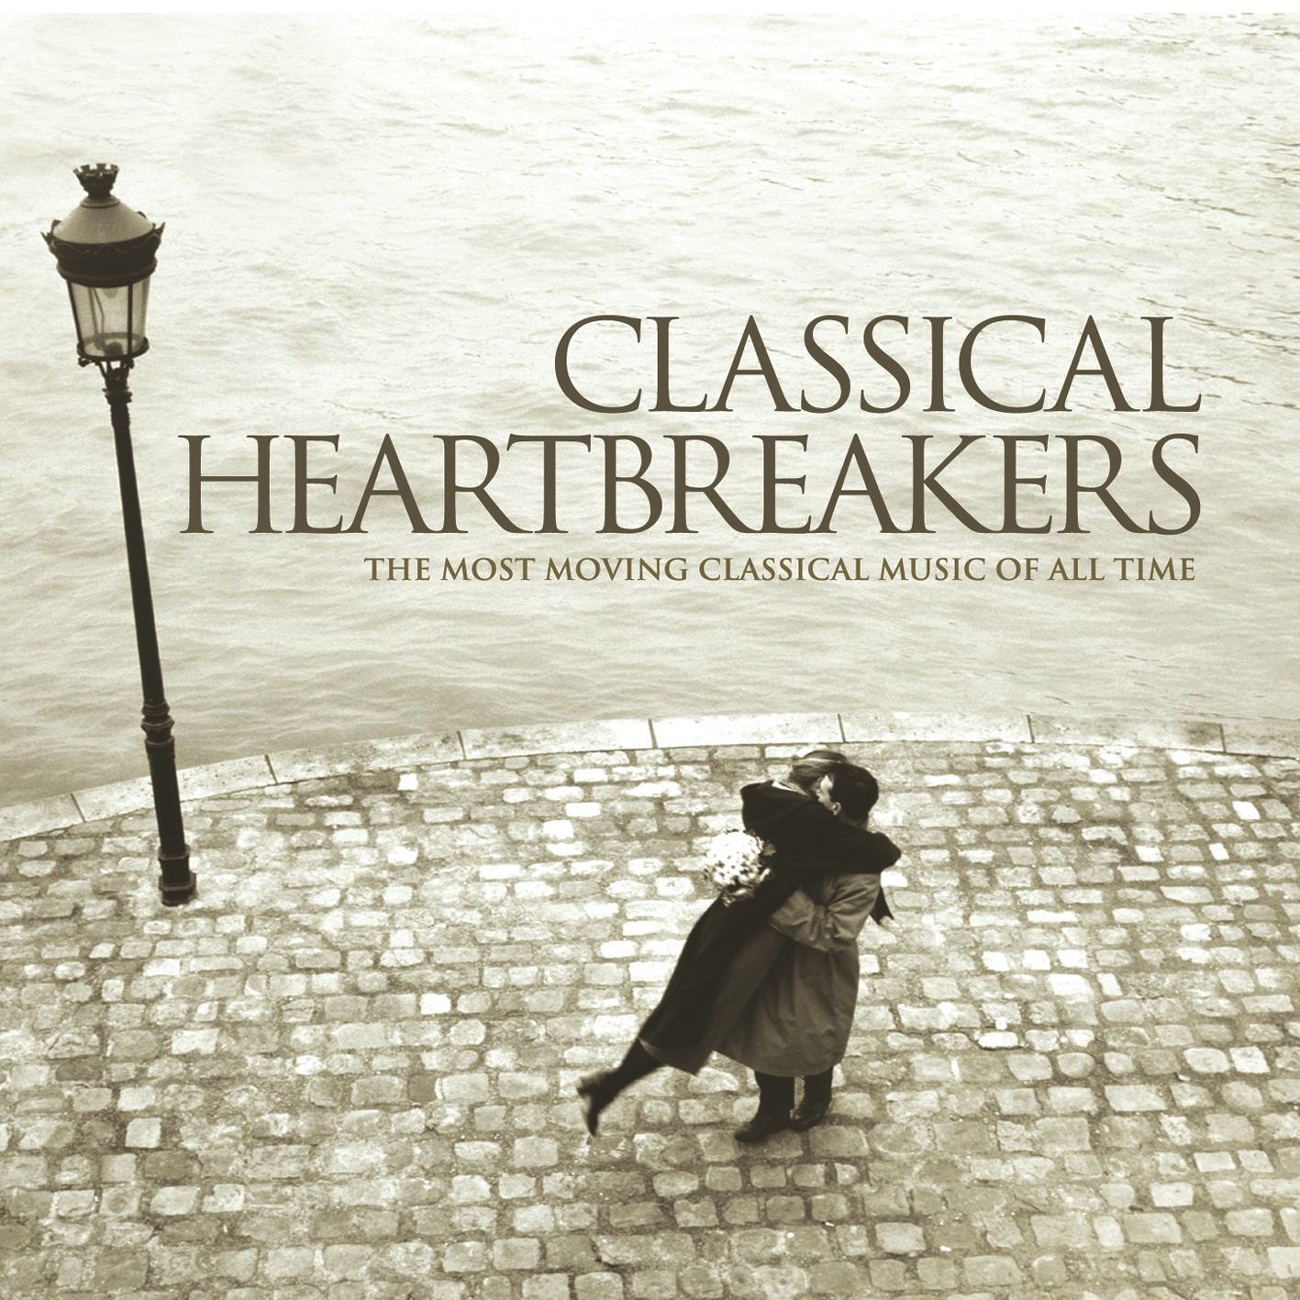 Classical Heartbreakers